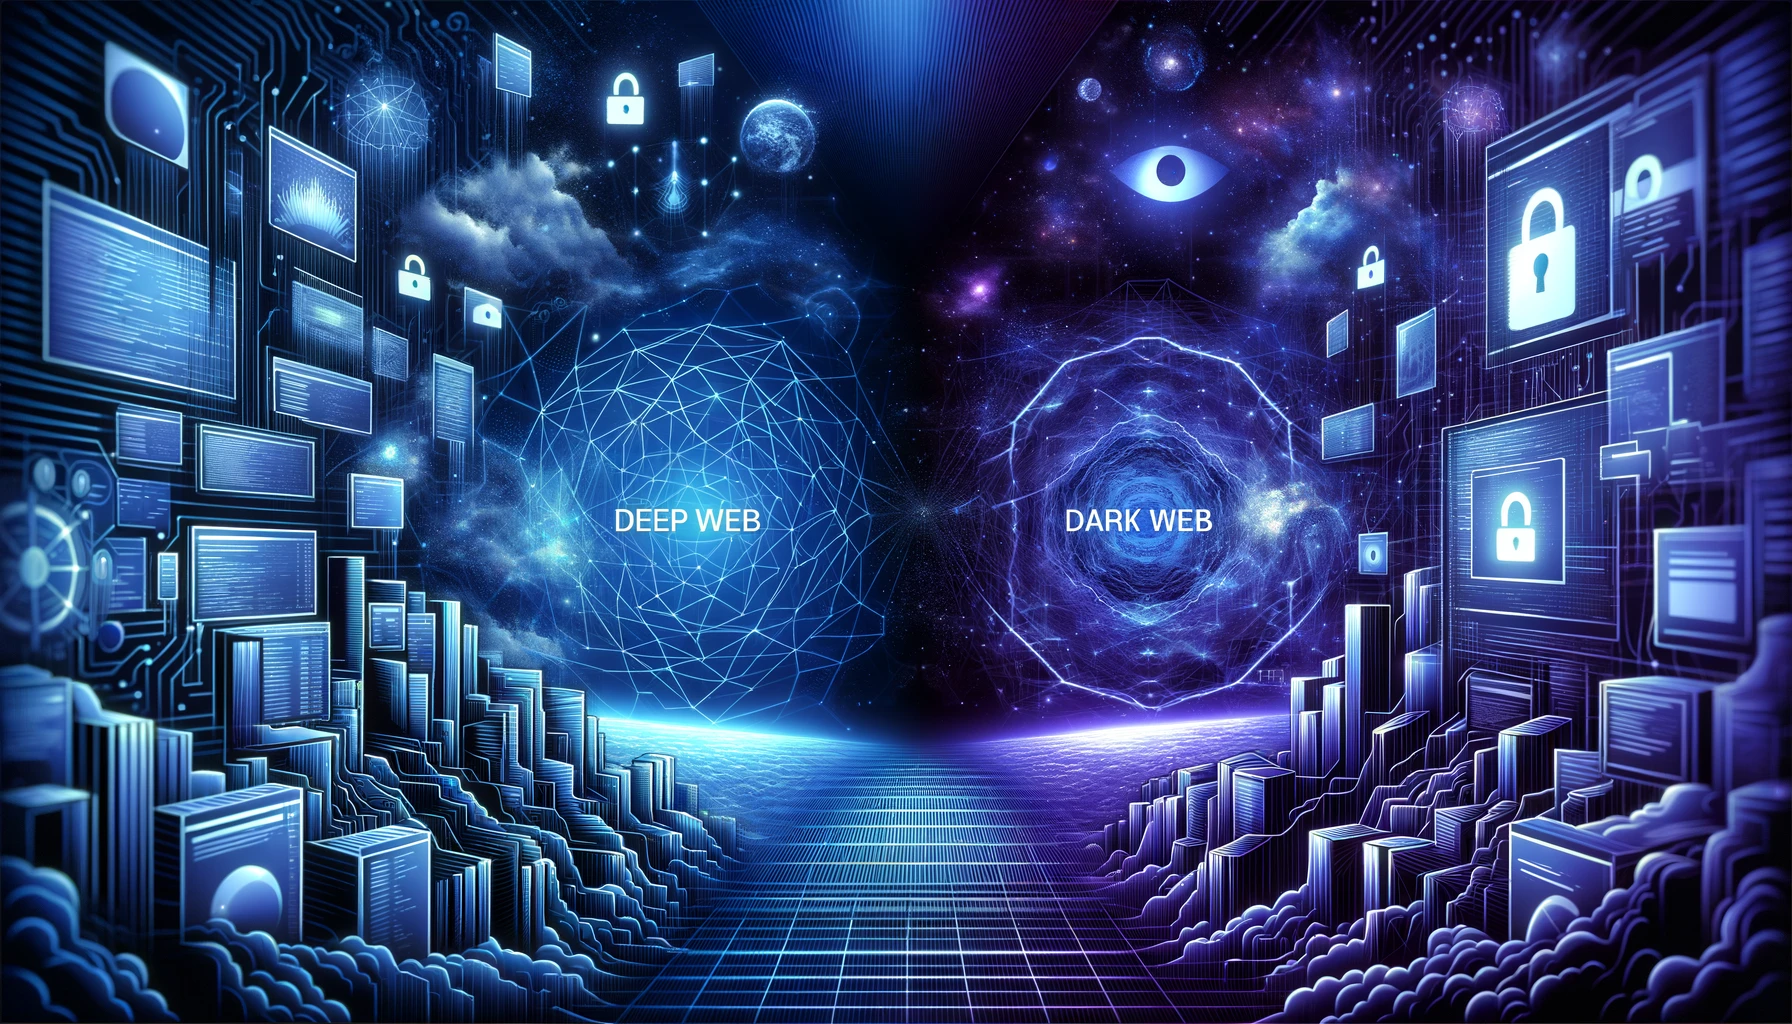 Deep Web vs Dark Web Definition